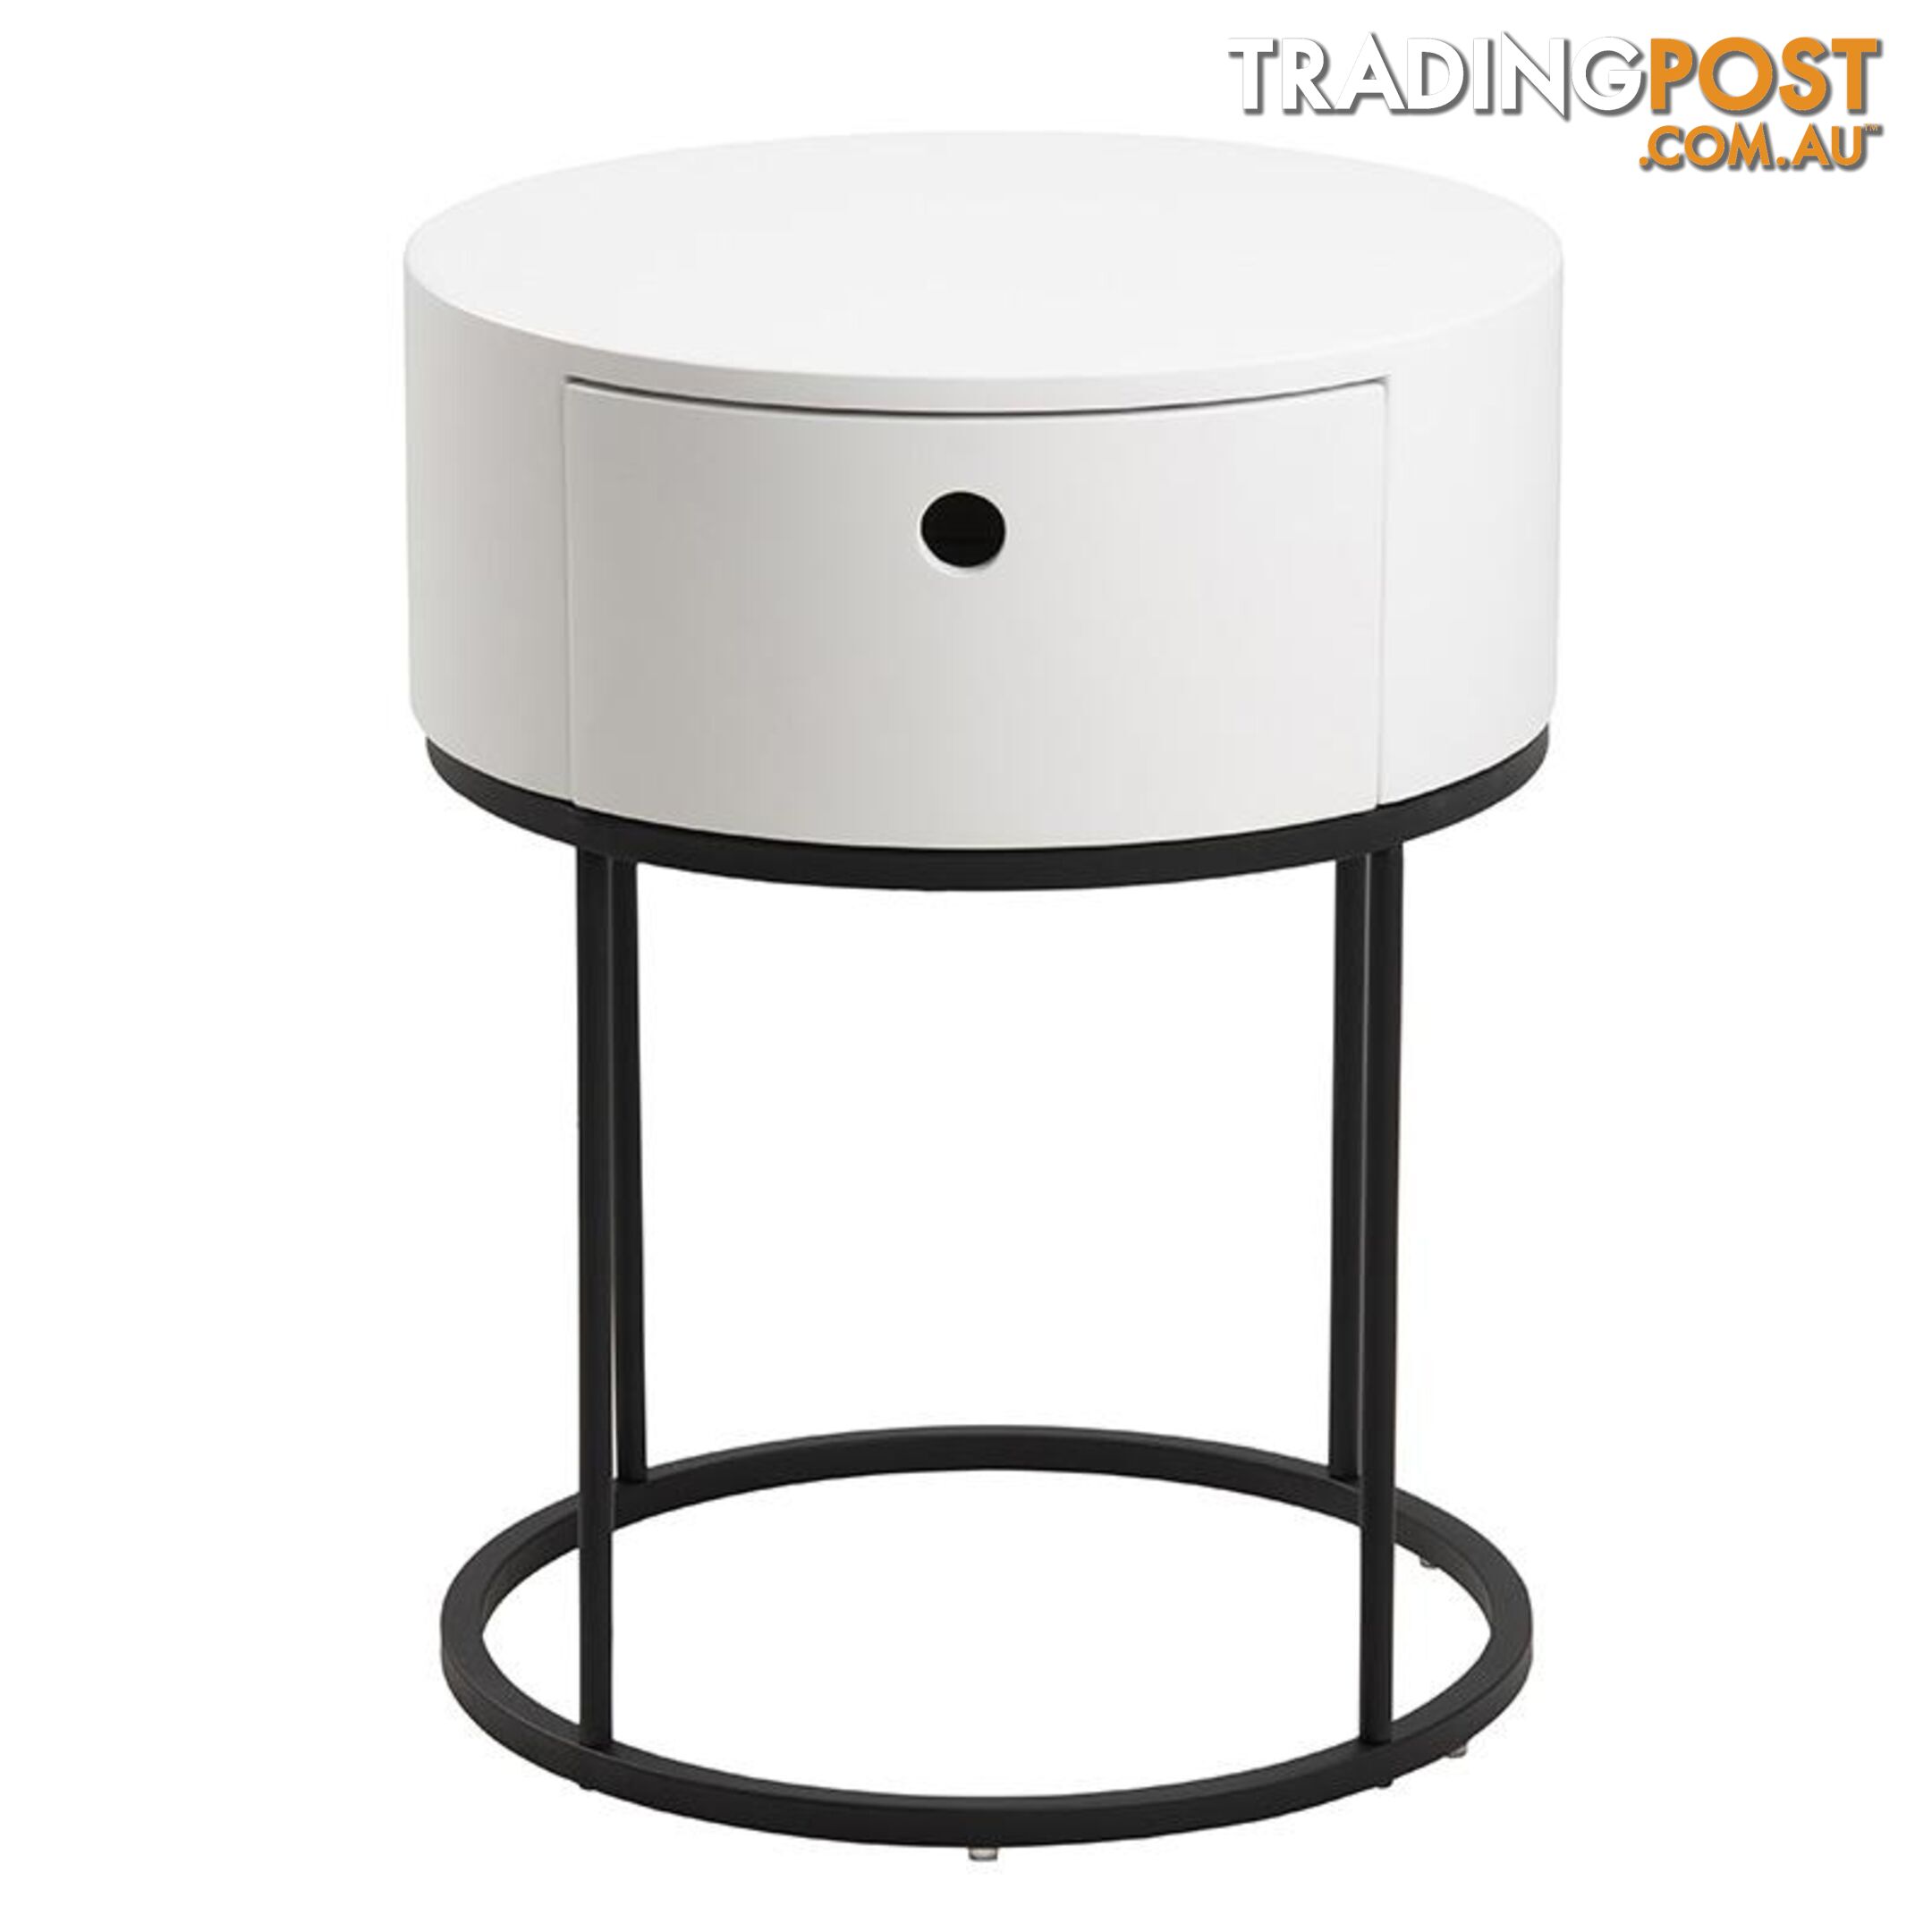 POLON Bedside Table 40cm - White & Black - AC-0000087871 - 5713941133892